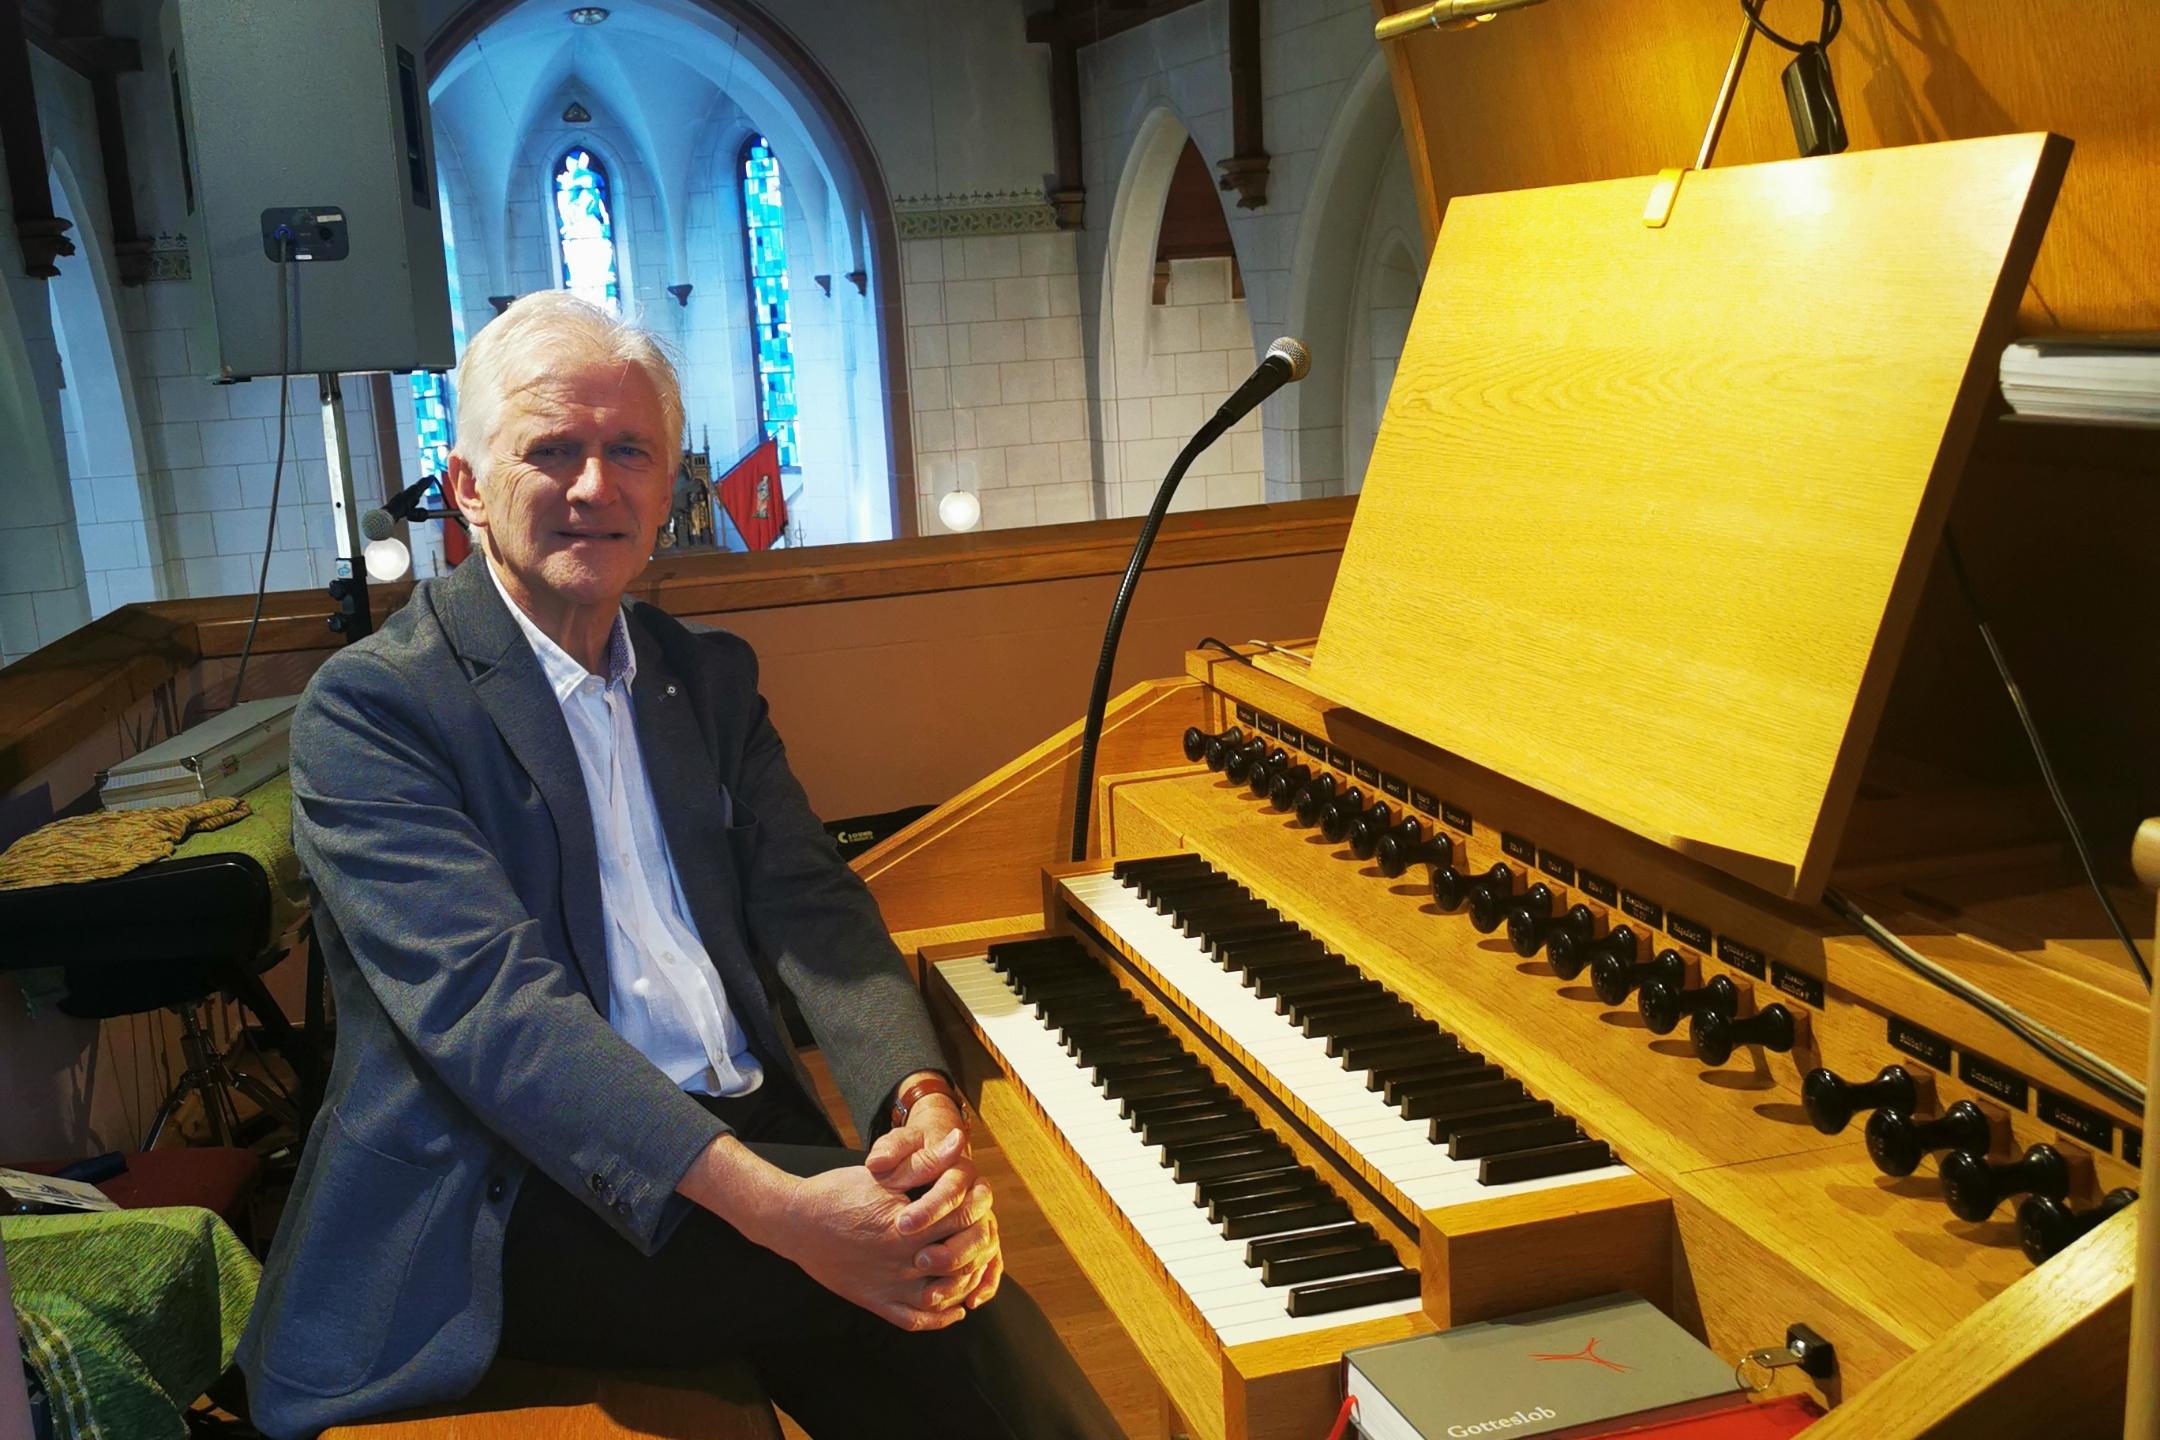 Ignace Michiels, Organist der Kathedrale St. Salvator in Brügge